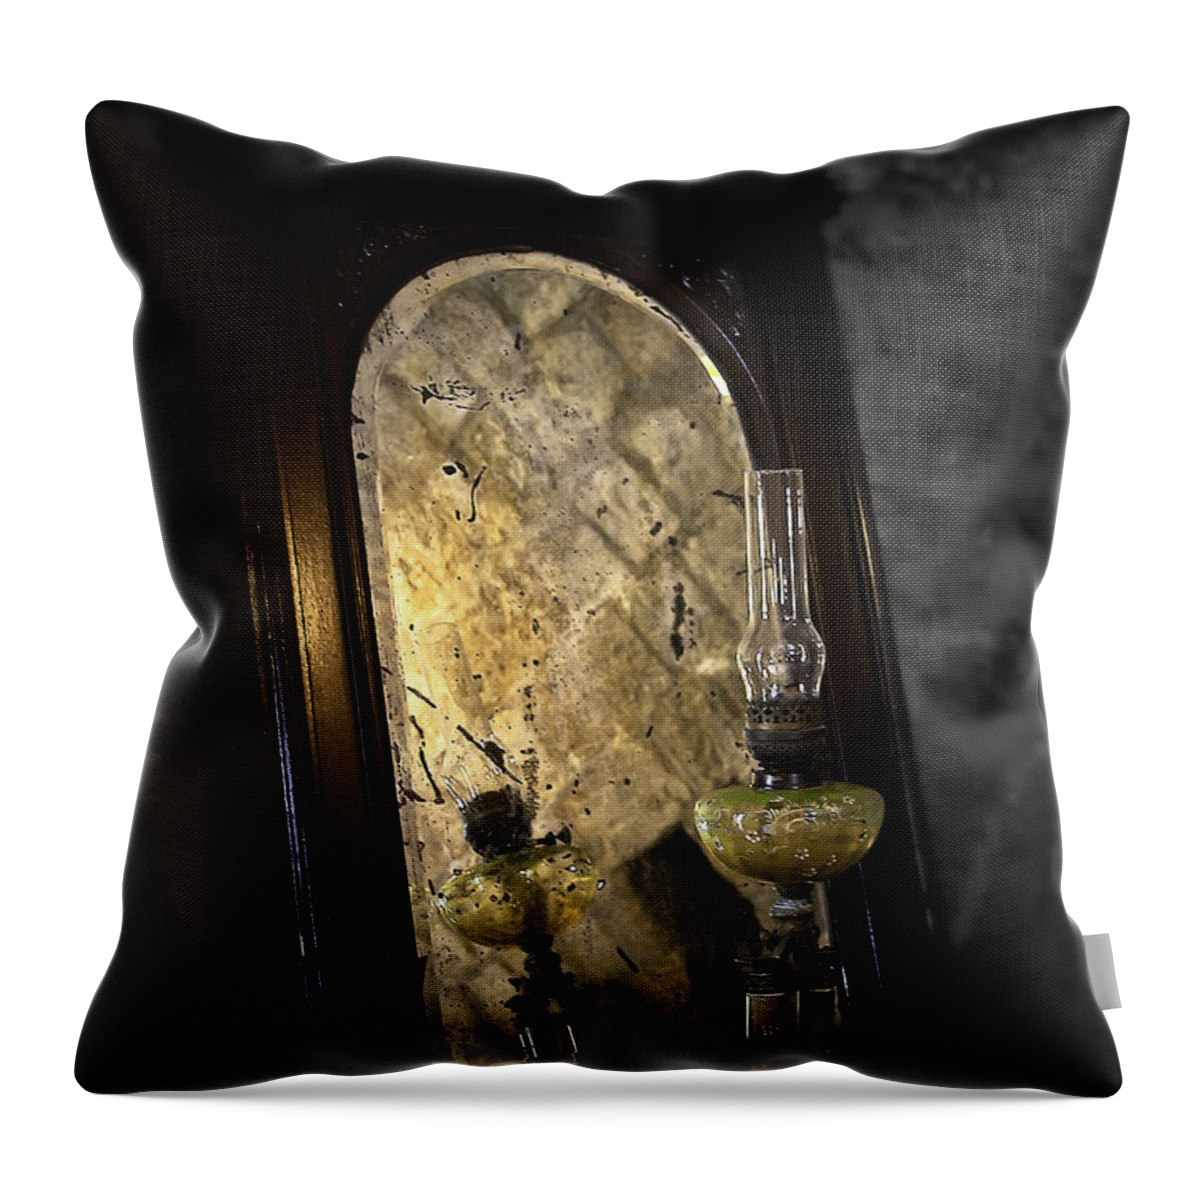 Dark Side Decorative Pillows